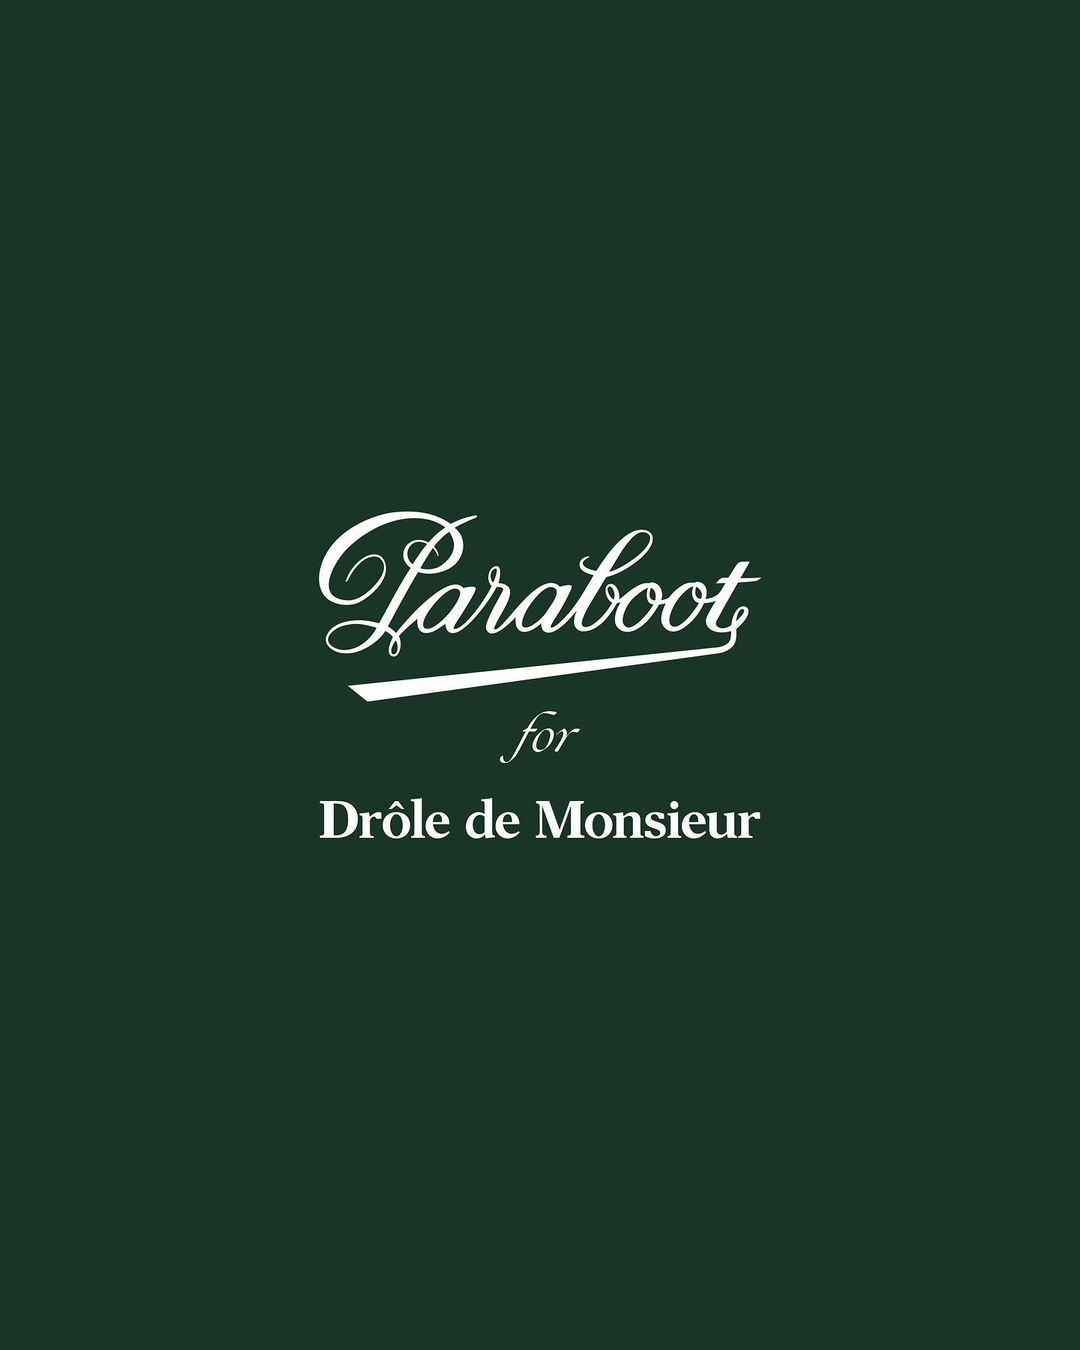 paraboot drole monsieur logos